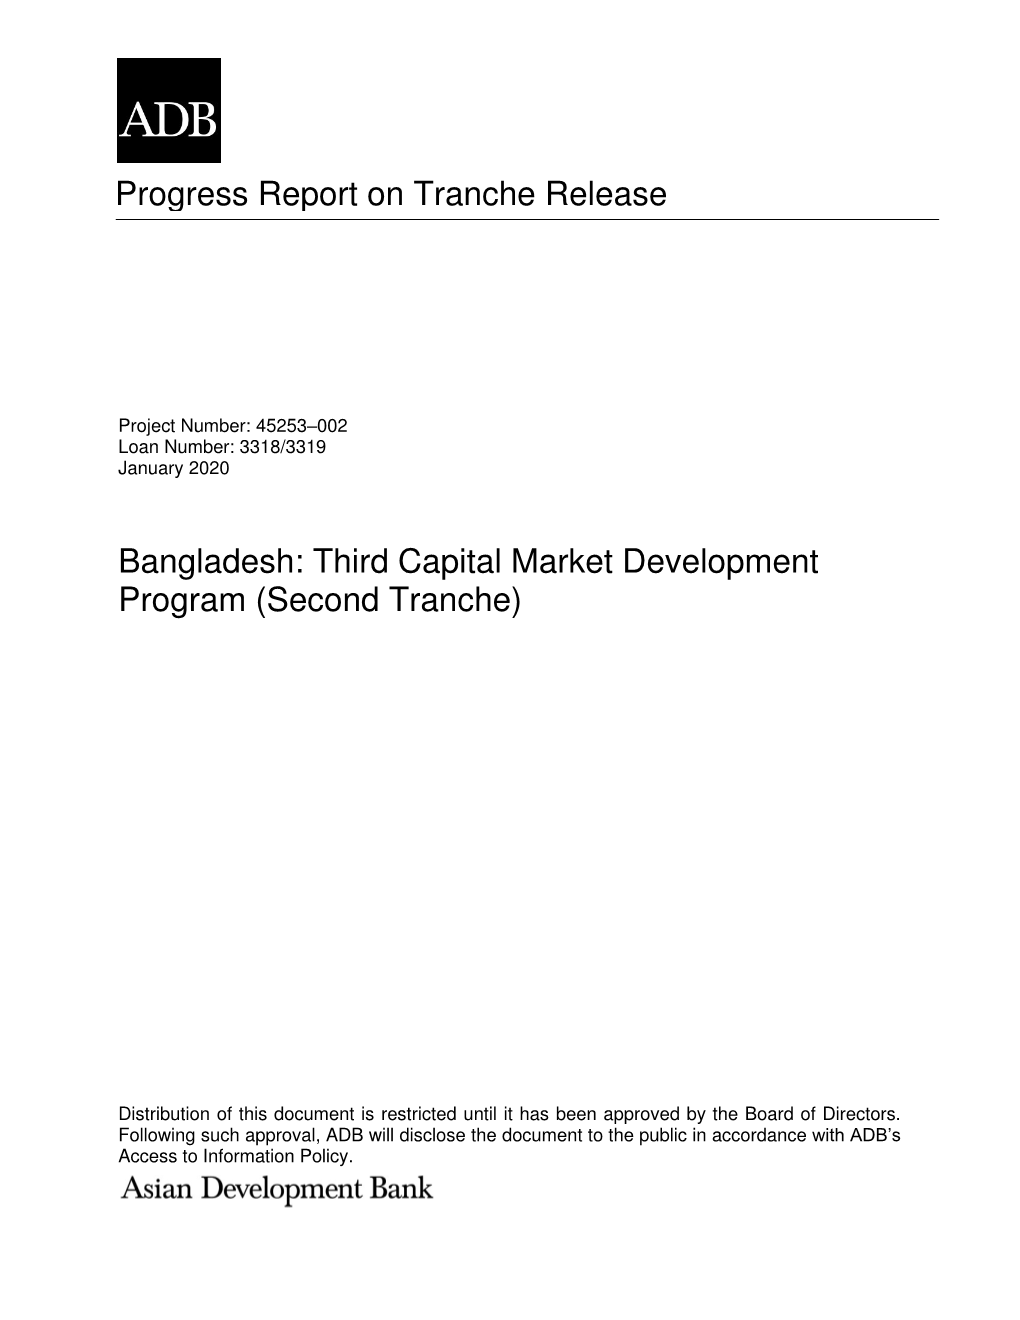 Progress Report on Tranche Release Bangladesh: Third Capital Market